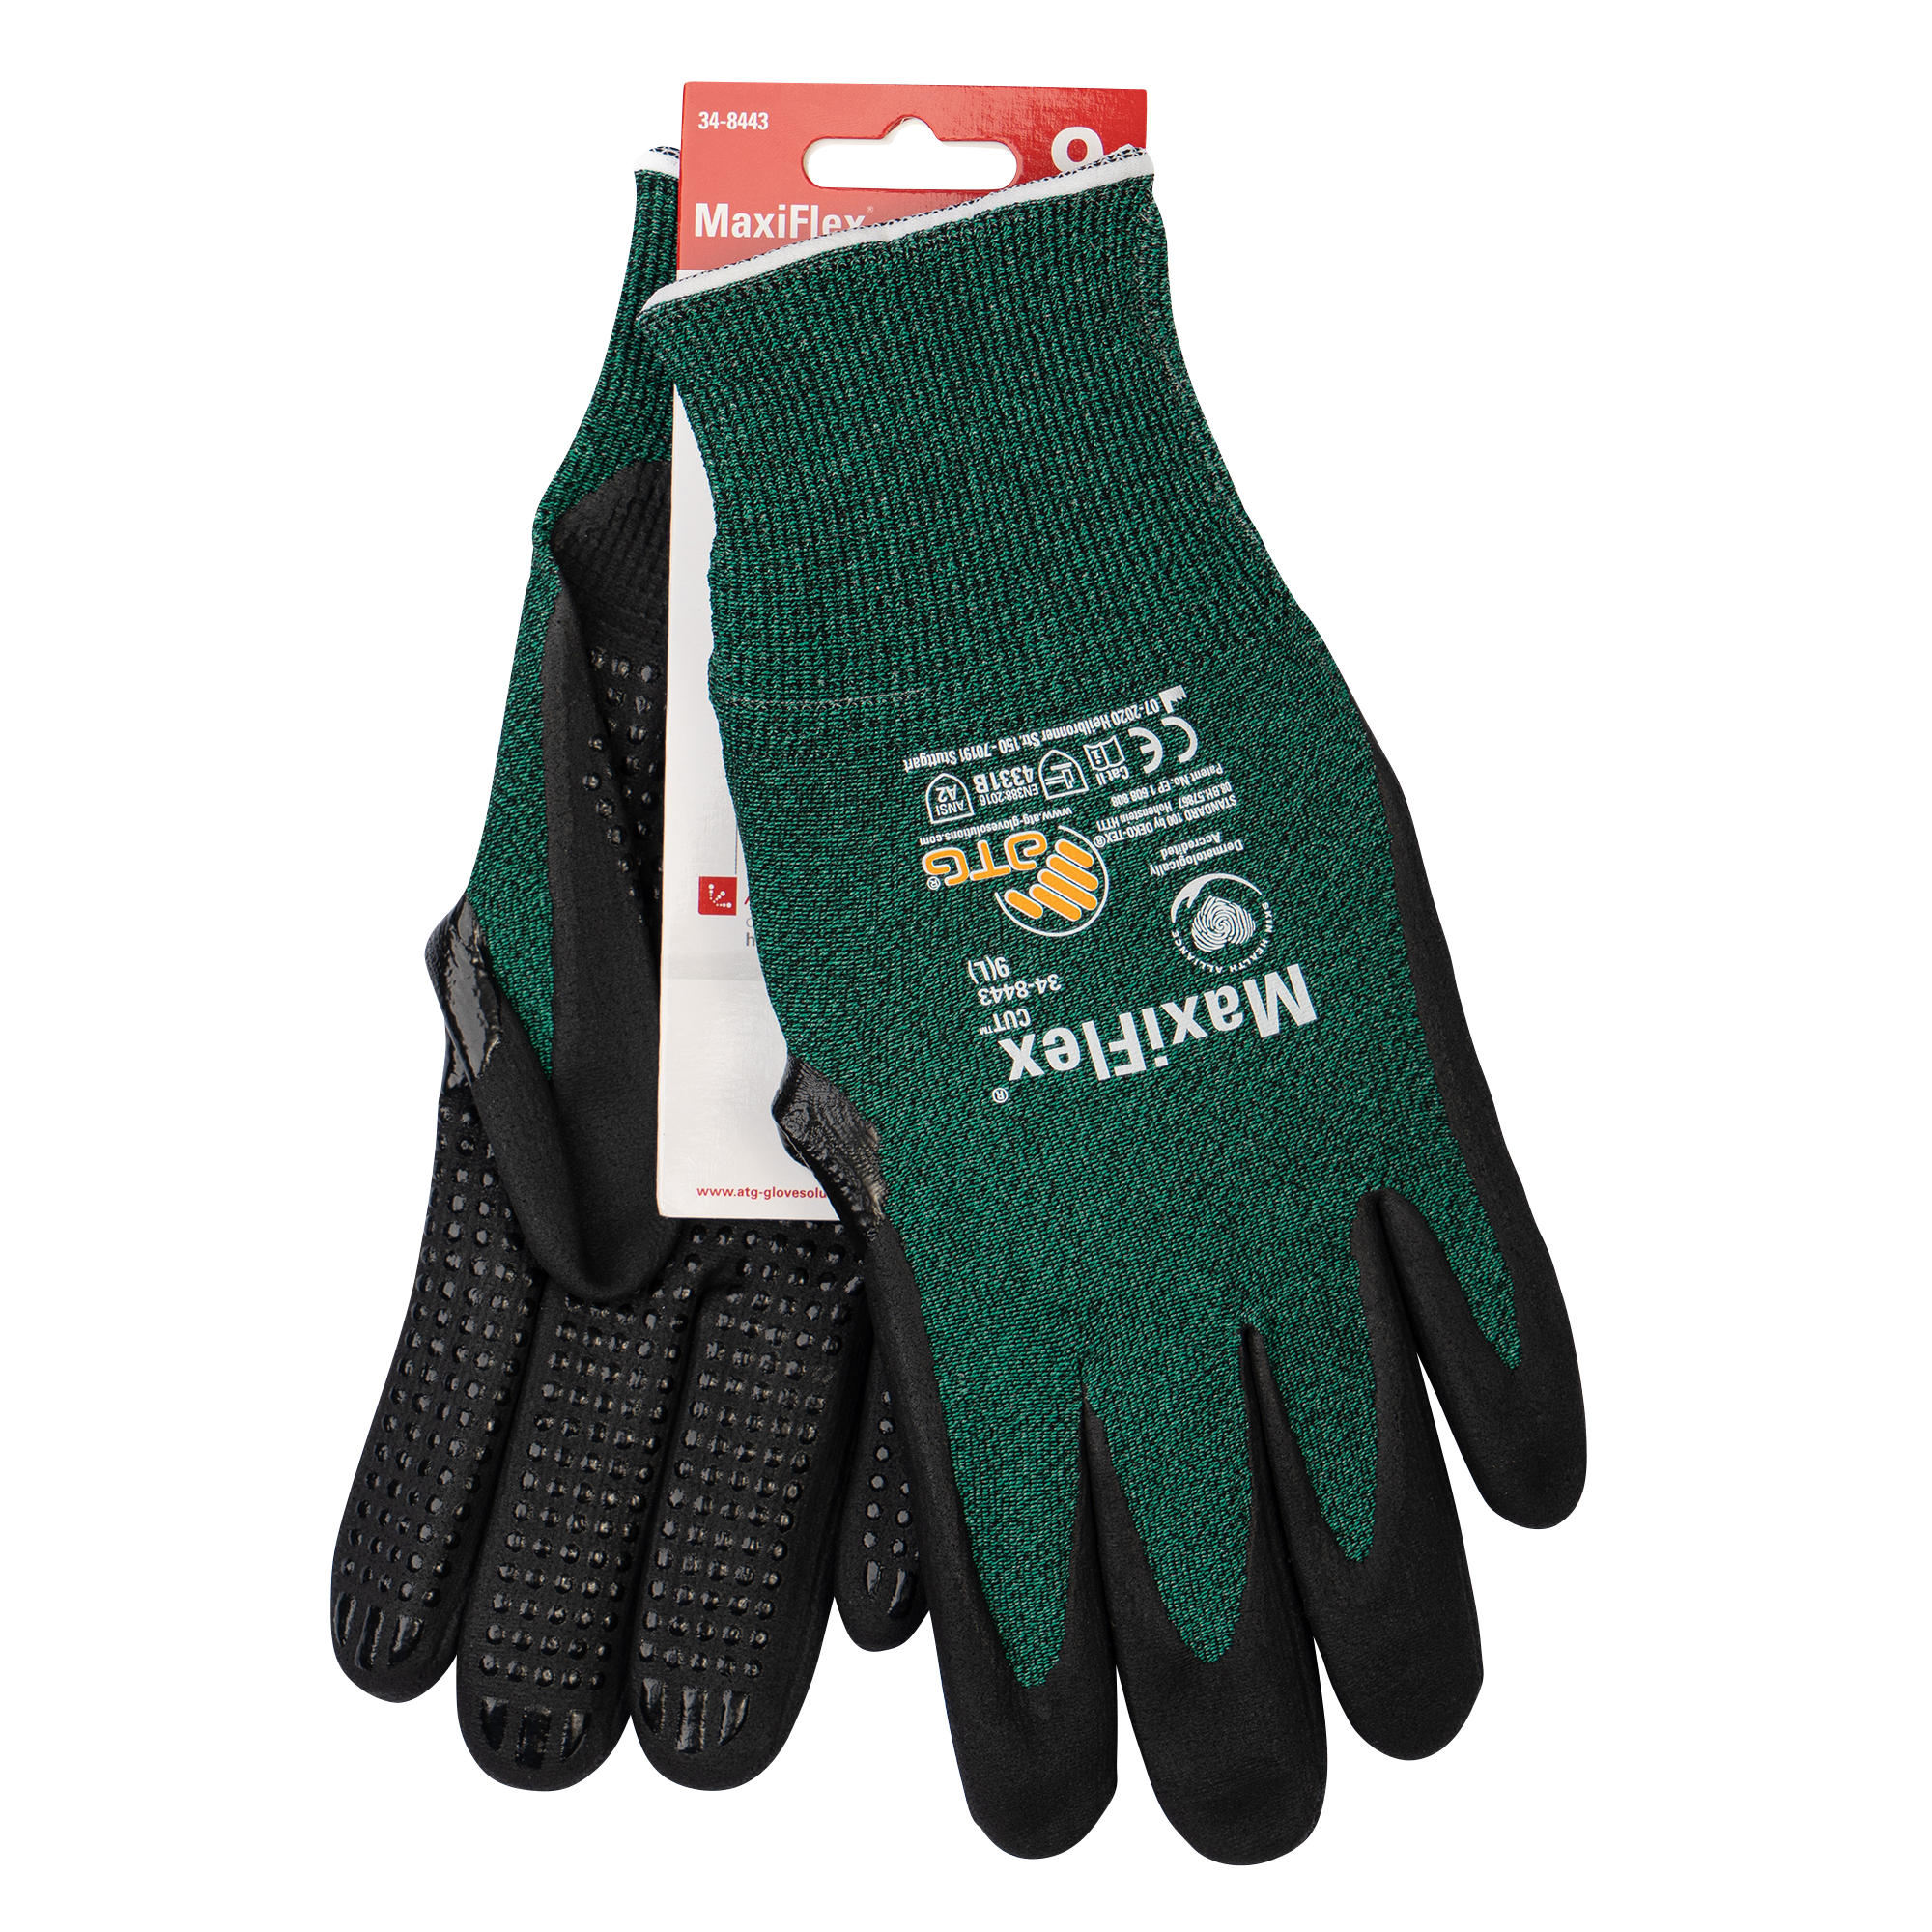 MaxiFlex Cut 3B DT HT Gloves